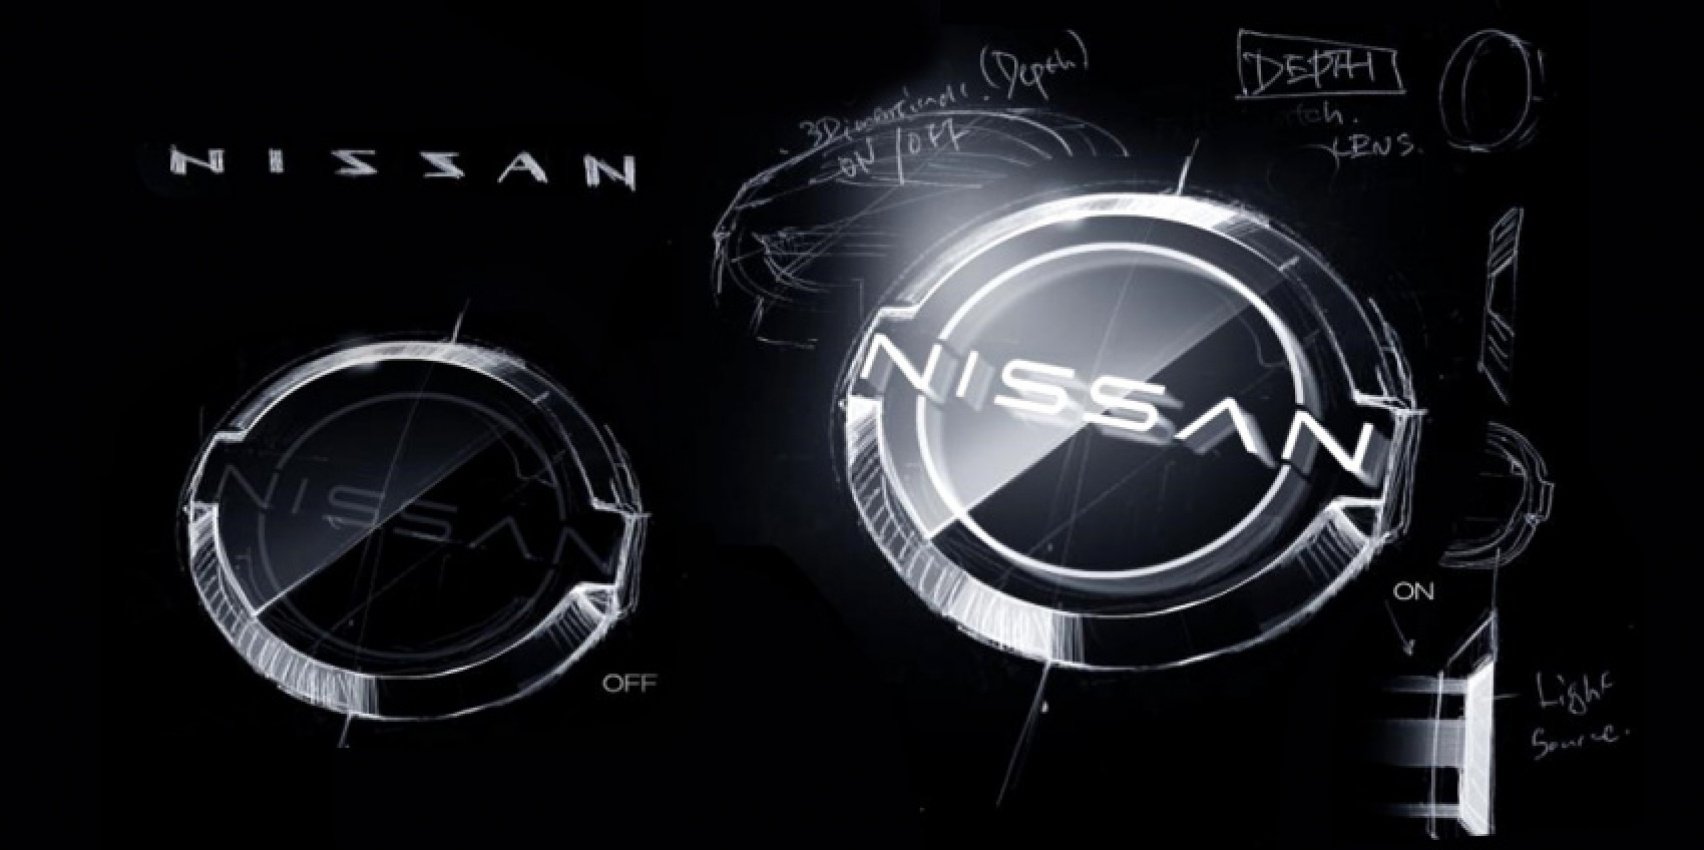 autos, car brands, cars, nissan, automotive, branding, logo, nissan signals a refreshed brand with new logo